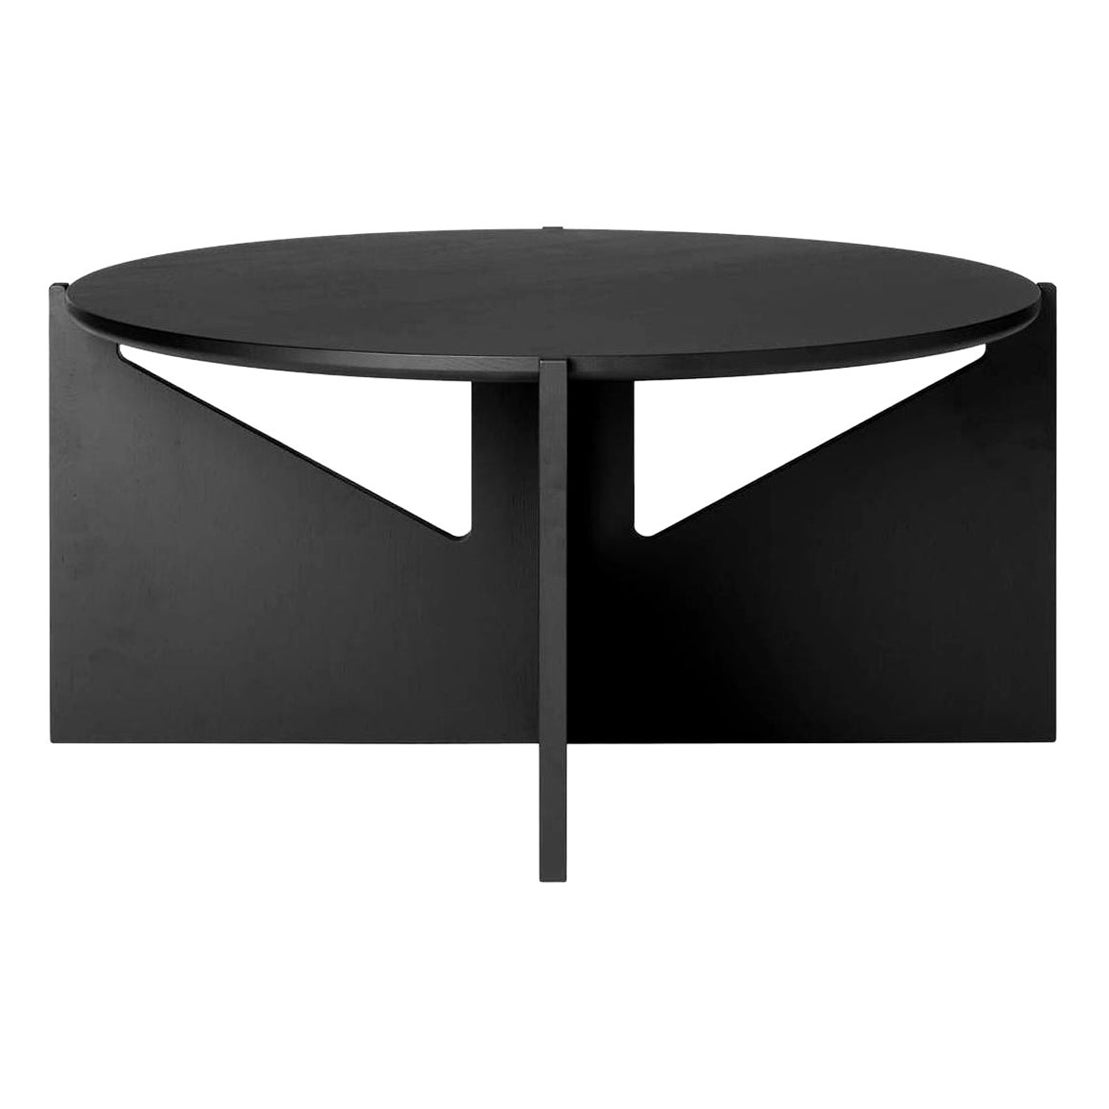 XL Black Table by Kristina Dam Studio